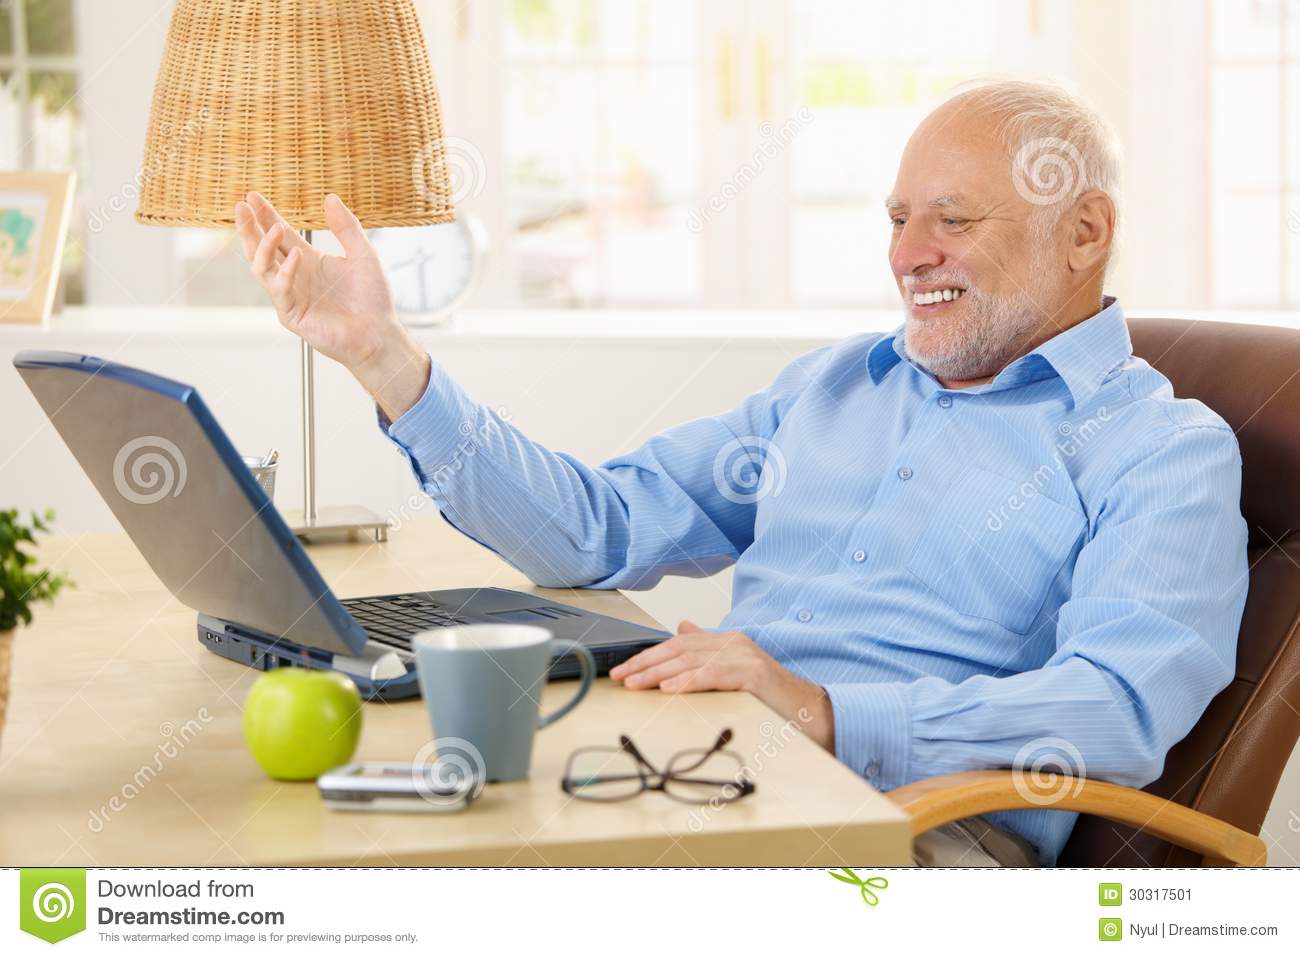 Old Man at Computer Meme